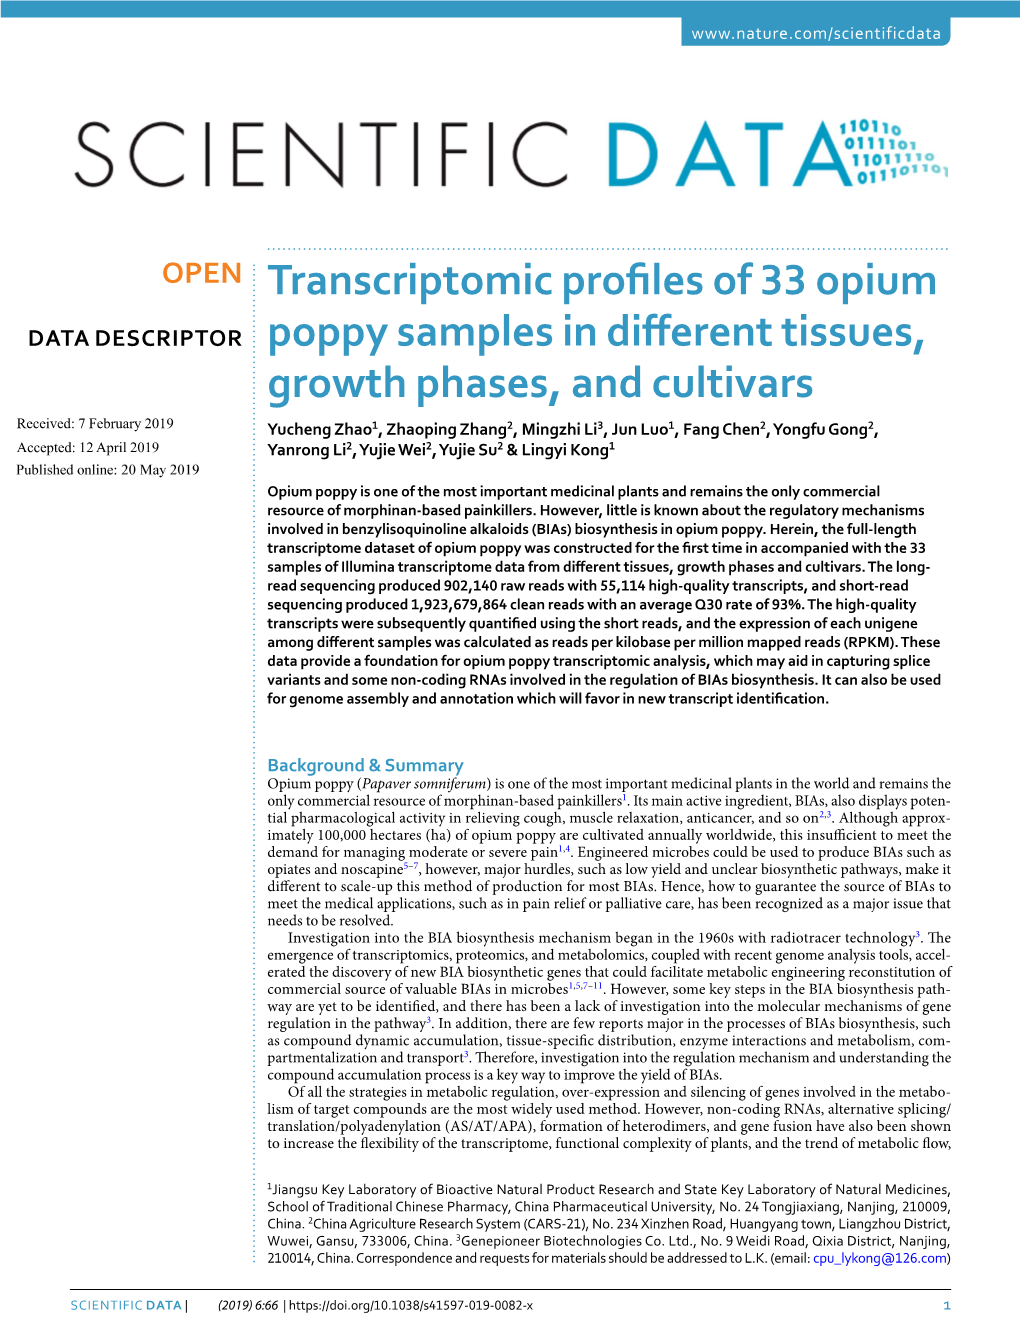 Transcriptomic Profiles of 33 Opium Poppy Samples in Different Tissues